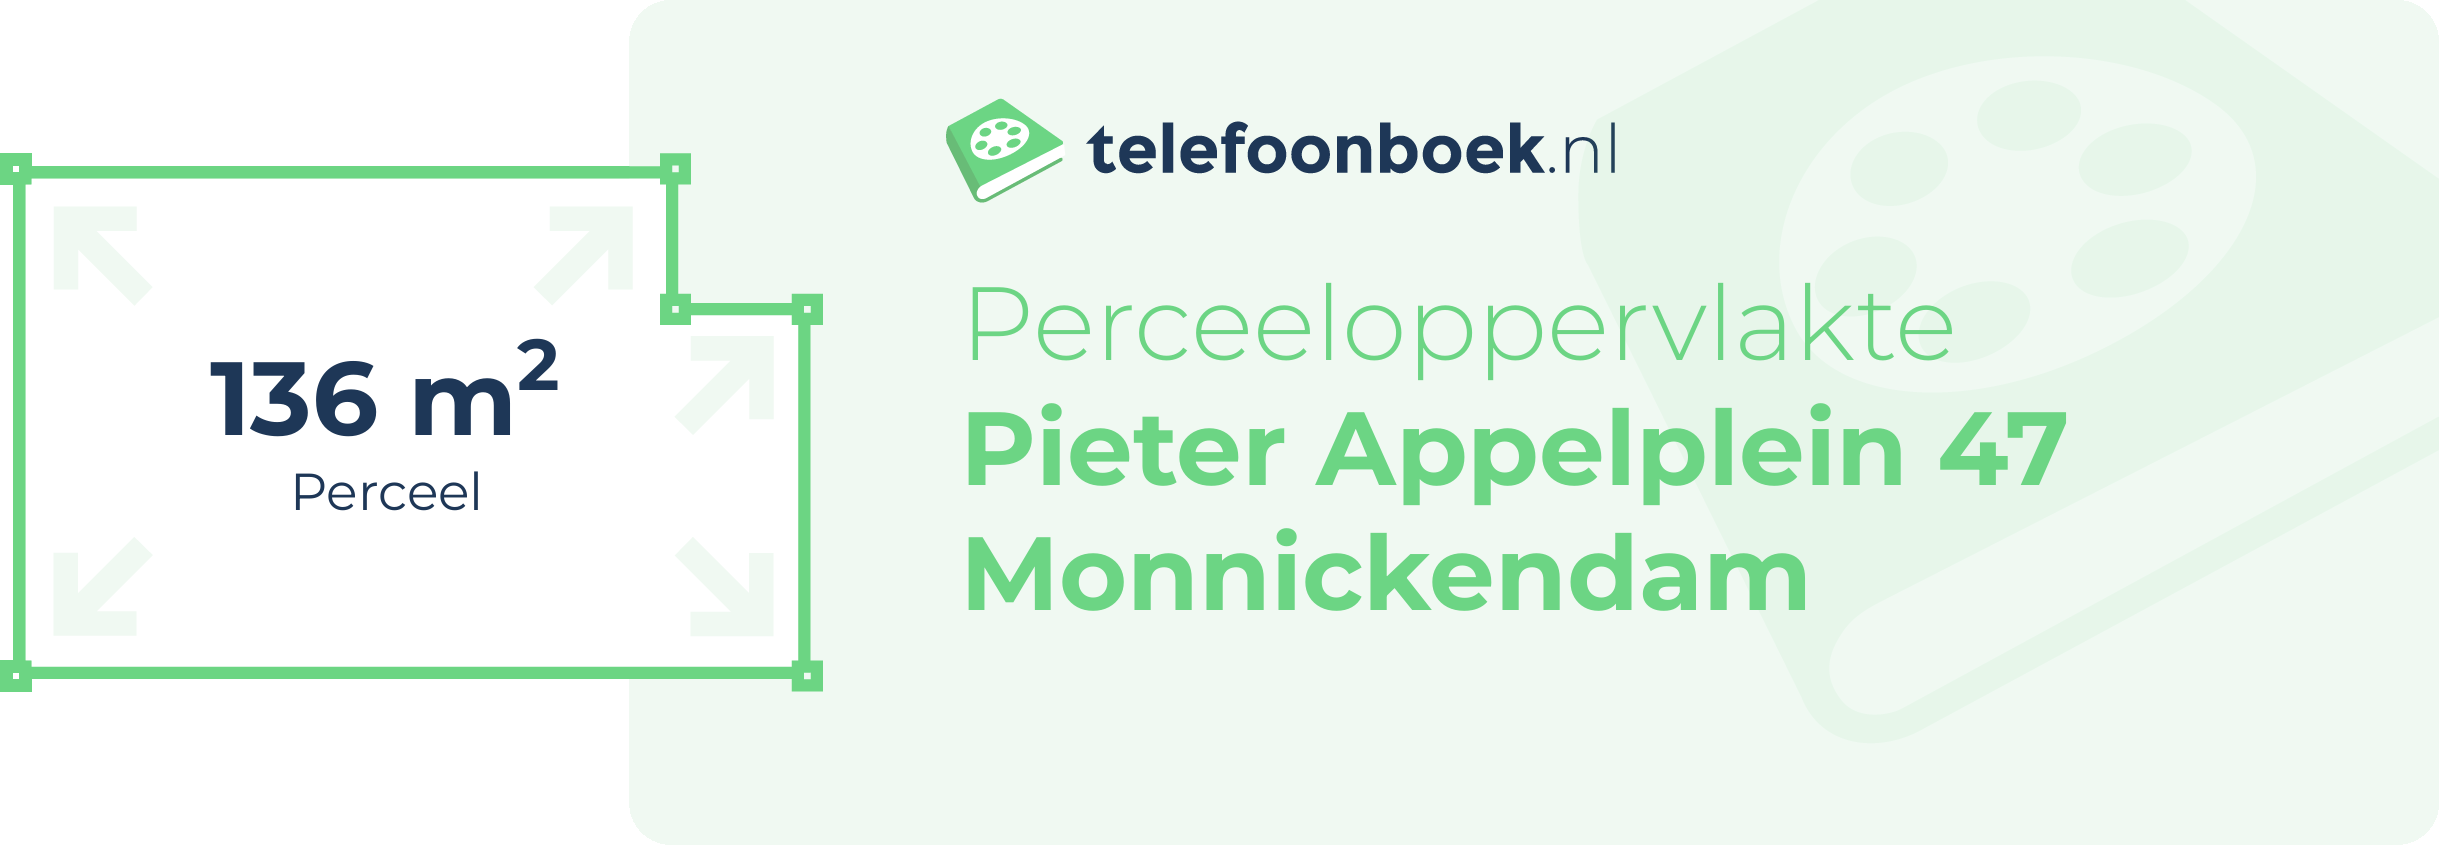 Perceeloppervlakte Pieter Appelplein 47 Monnickendam